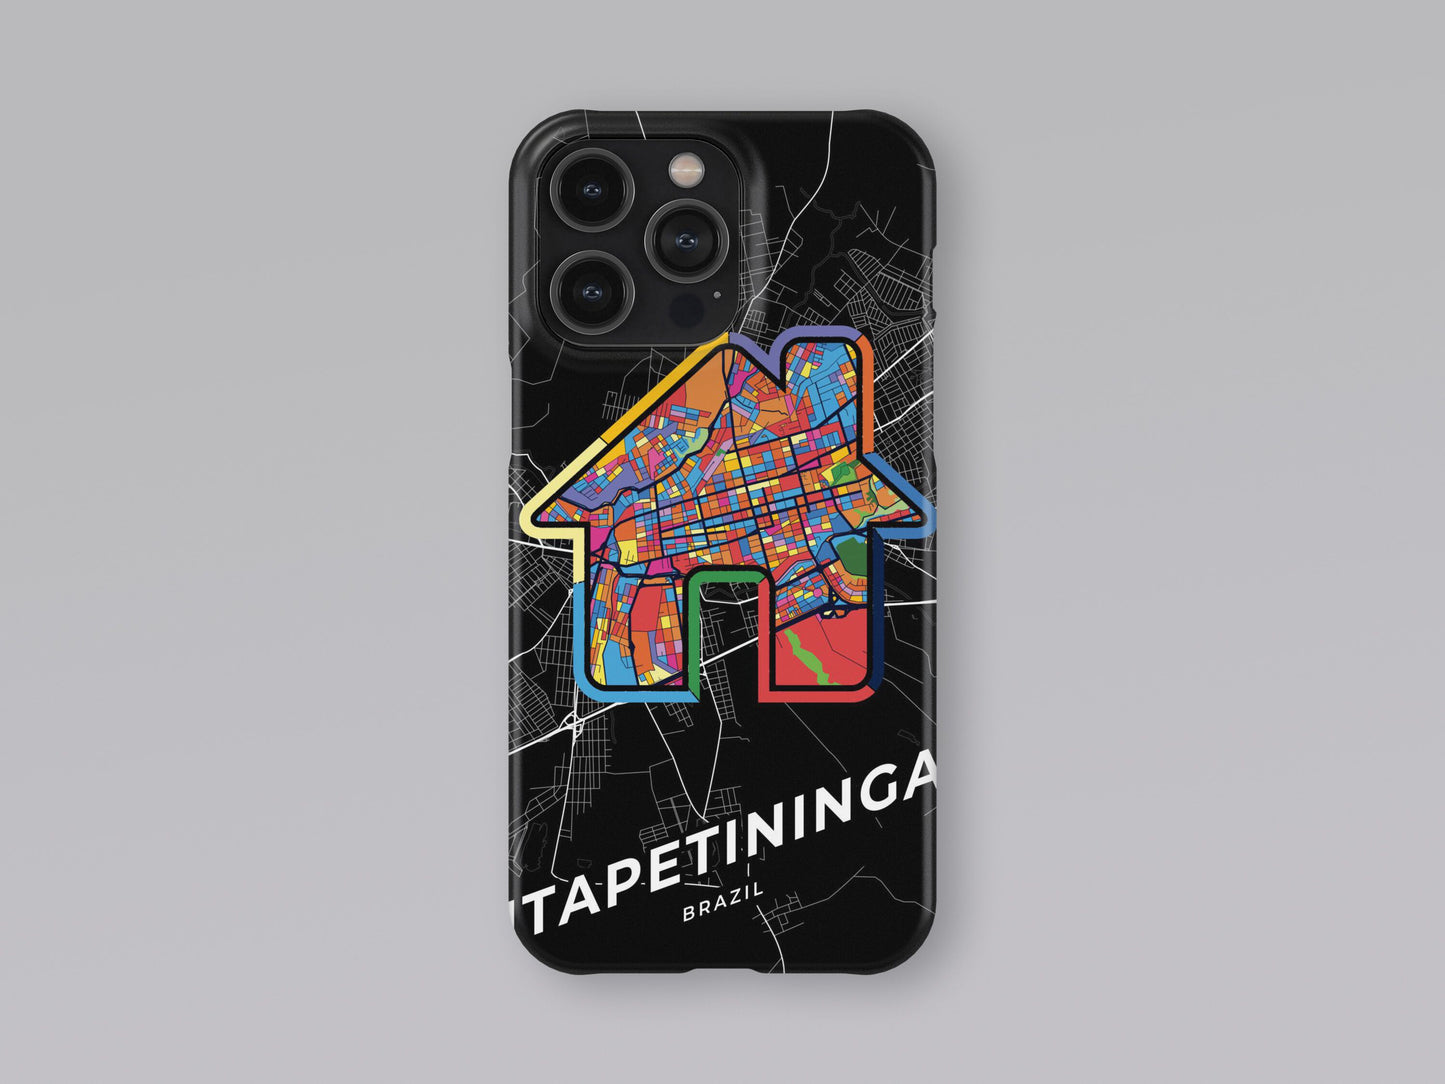 Itapetininga Brazil slim phone case with colorful icon. Birthday, wedding or housewarming gift. Couple match cases. 3